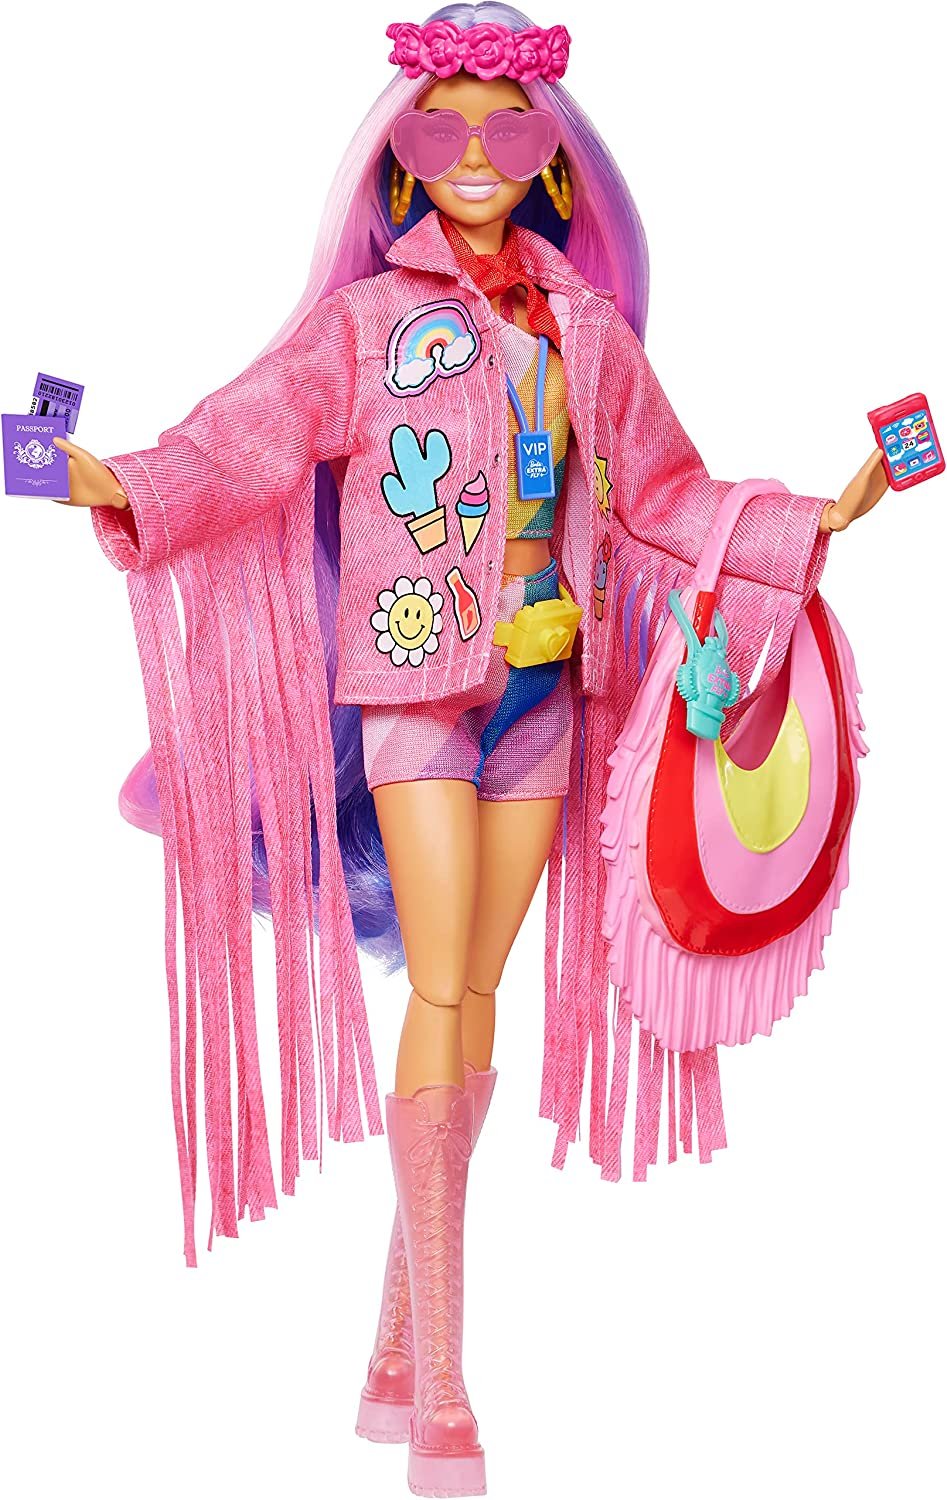 1682923909-youloveit-com-barbie-extra-fly-desrt-doll